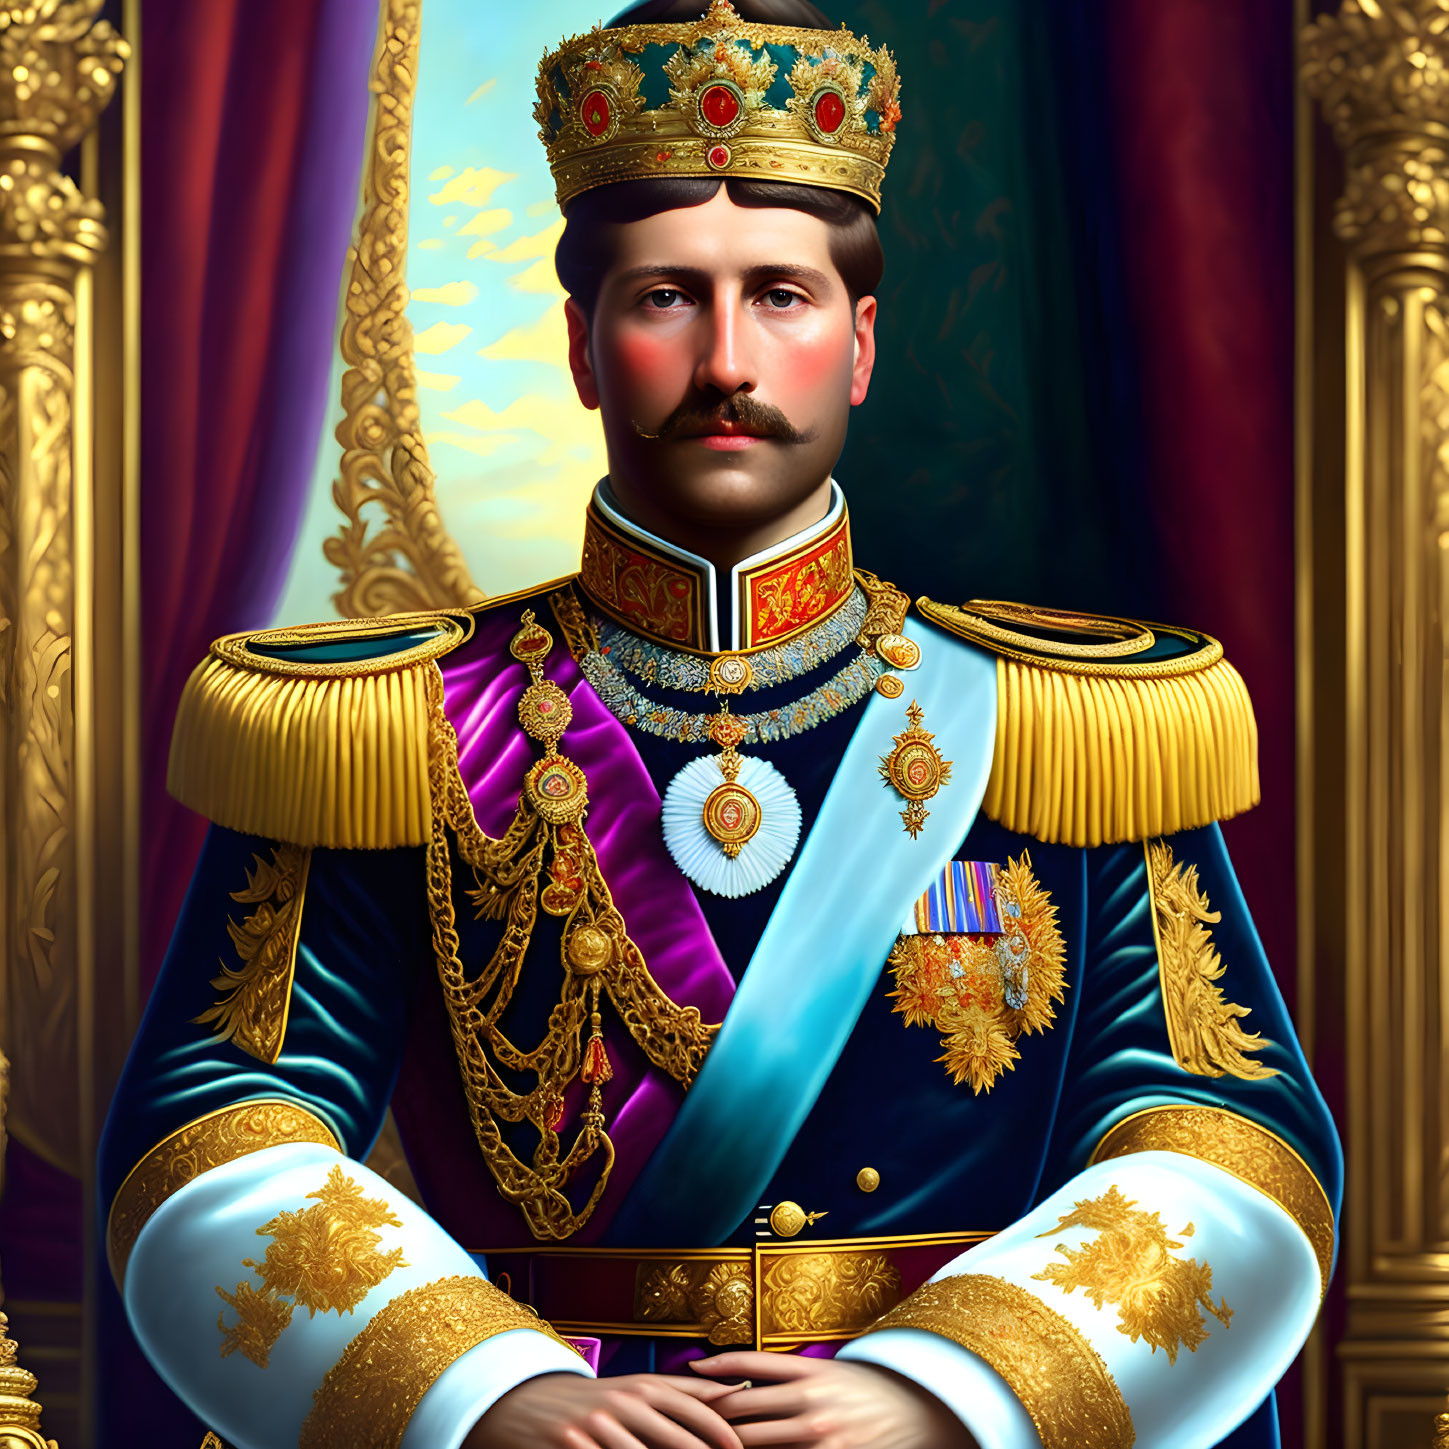 King of The Romanovs dynasty